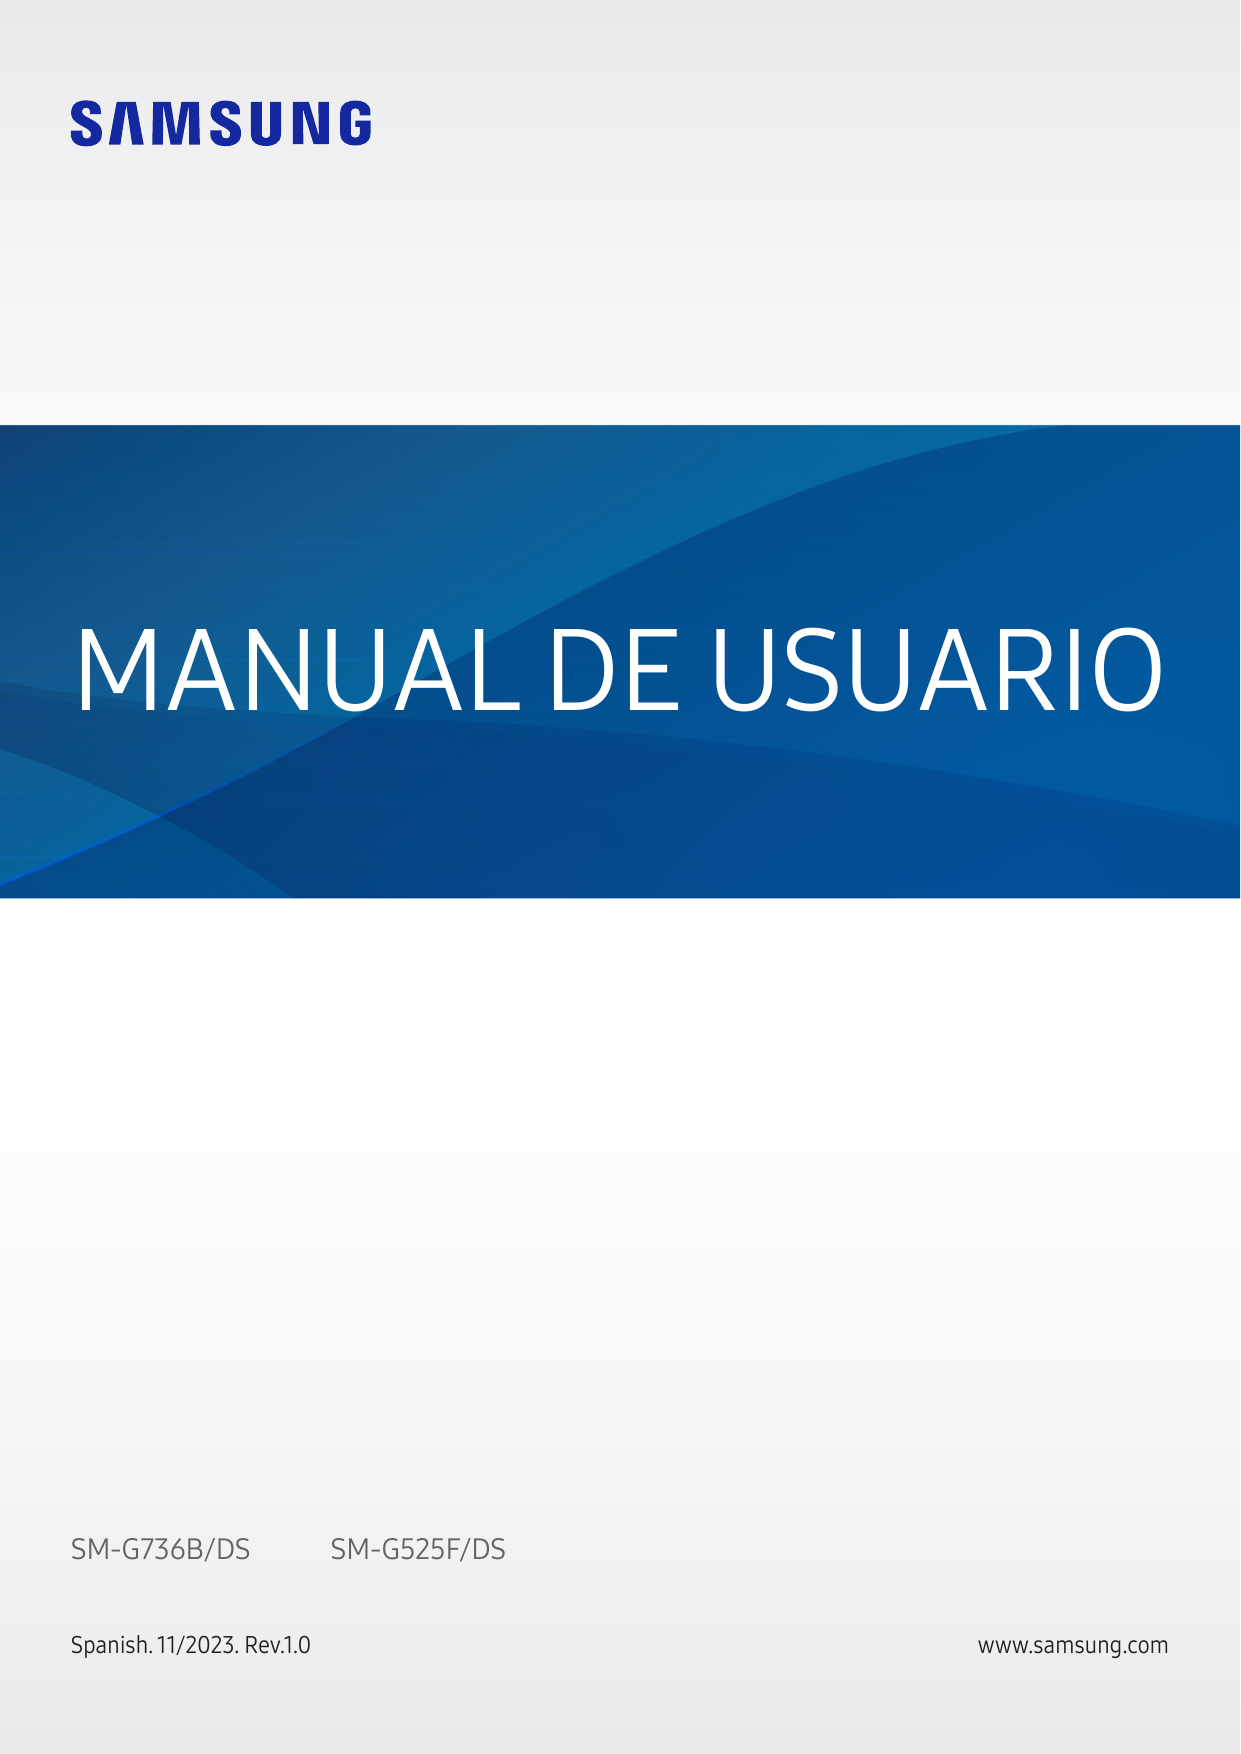 MANUAL DE USUARIOSM-G736B/DSSpanish. 11/2023. Rev.1.0SM-G525F/DSwww.samsung.com